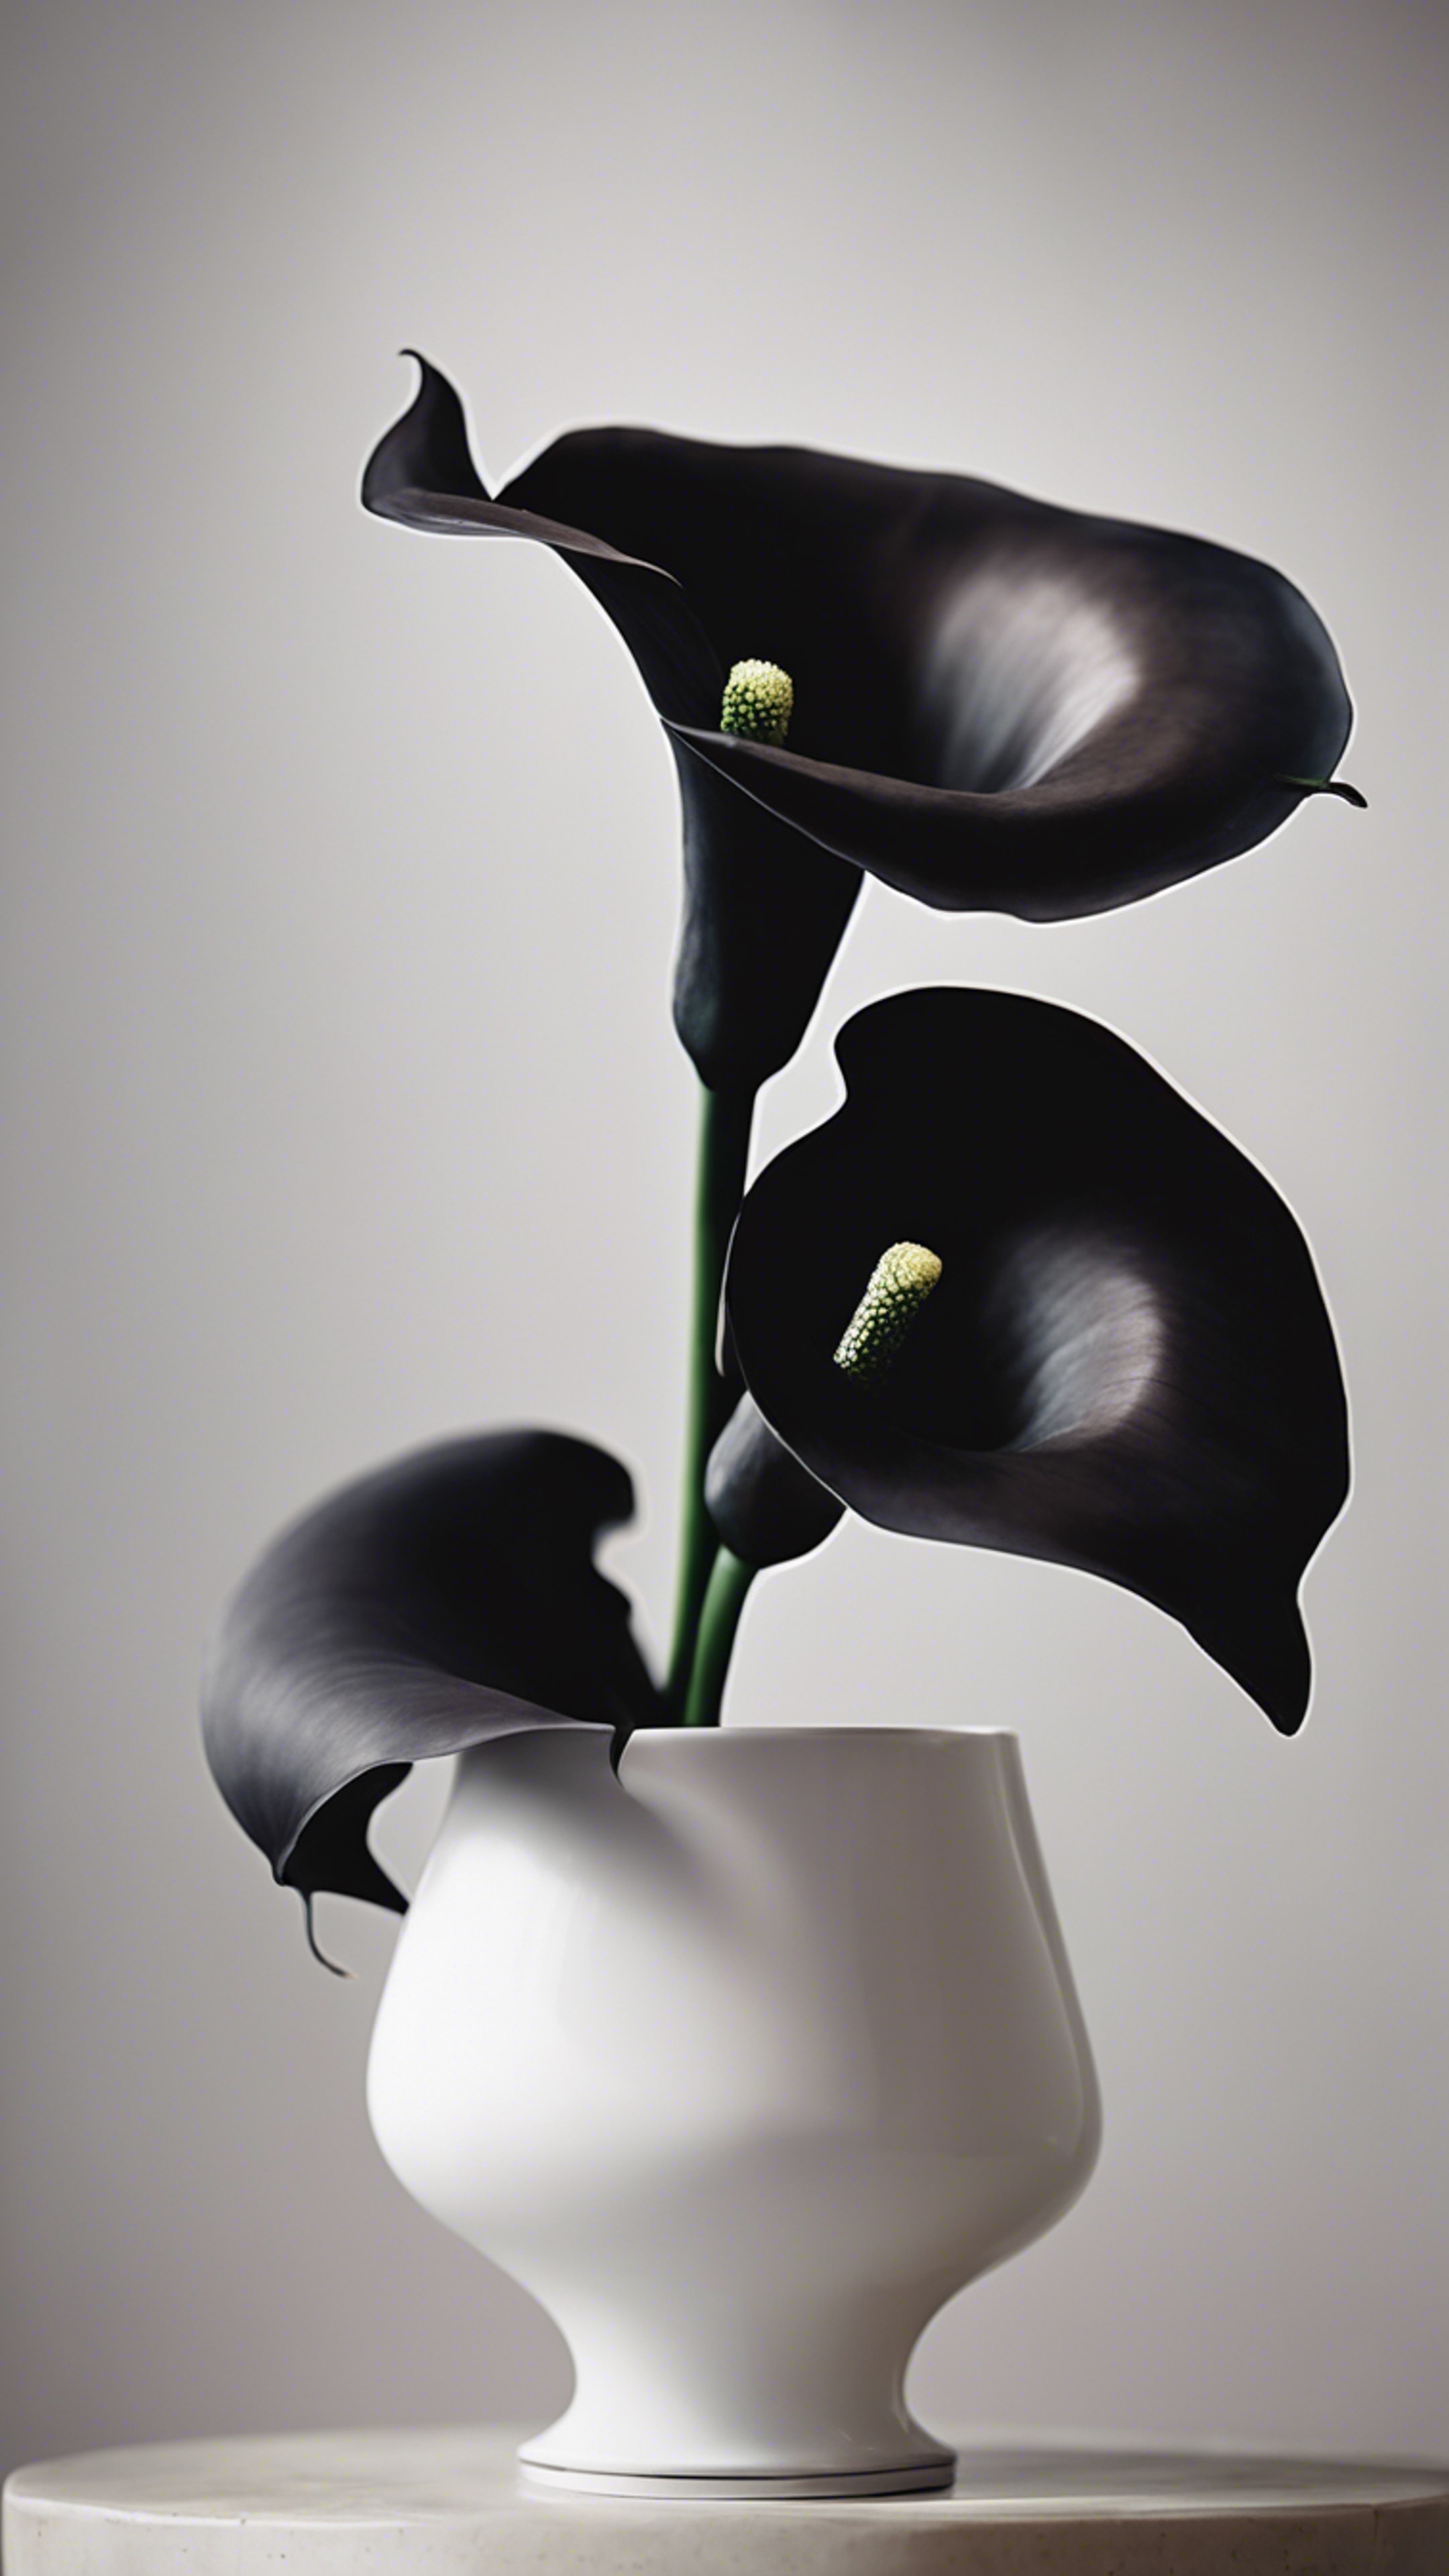 A breathtaking centerpiece featuring a black calla lily in a modern white vase. Tapeta[9d5d01b6790e4db4a8d5]